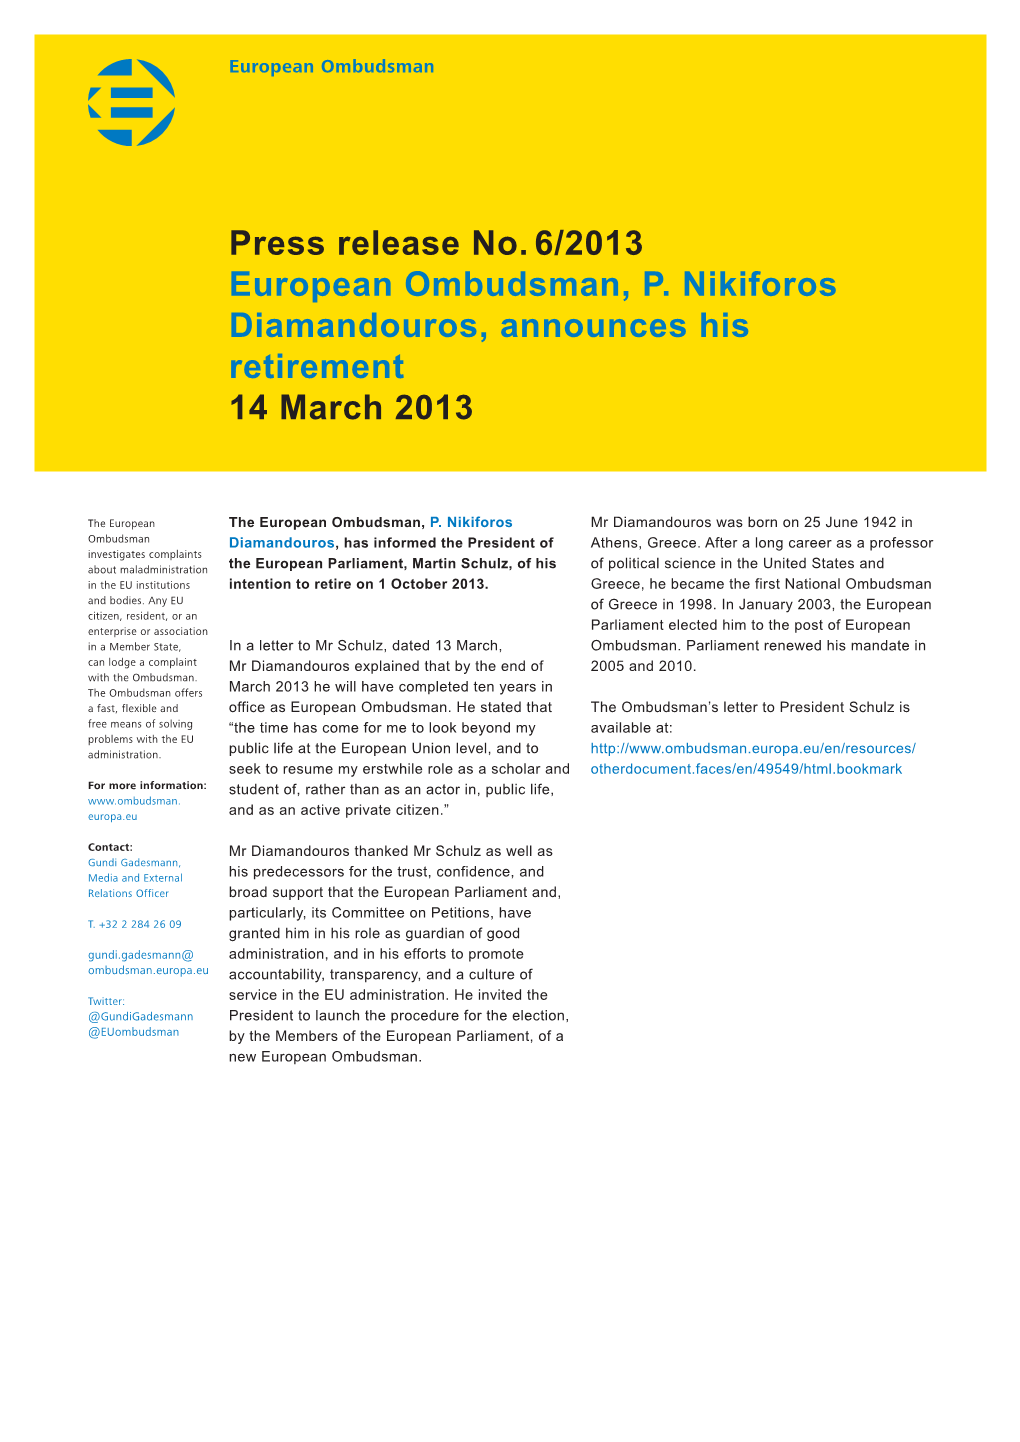 Press Release No. 6/2013 European Ombudsman, P. Nikiforos Diamandouros, Announces His Retirement 14 March 2013